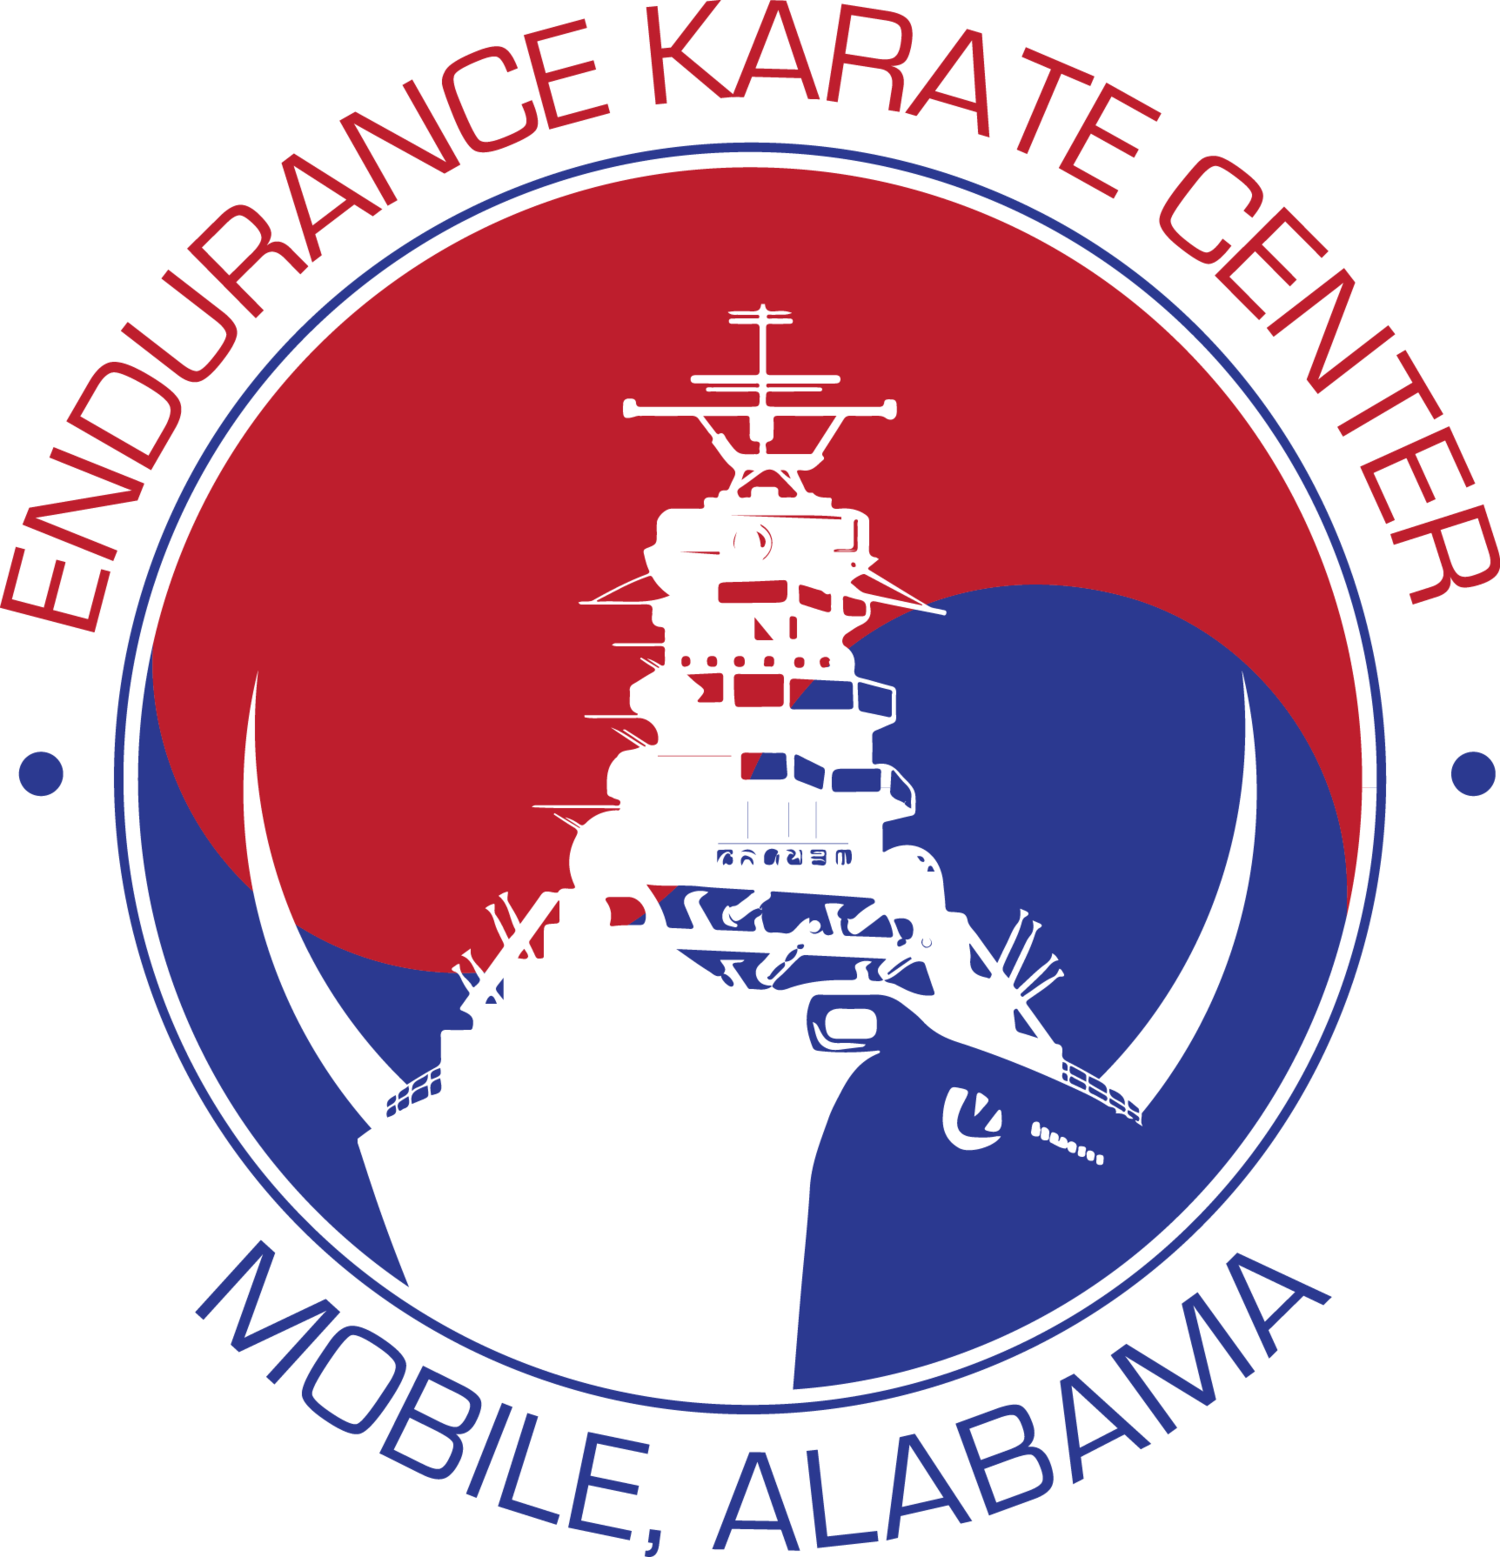 Endurance Karate Center